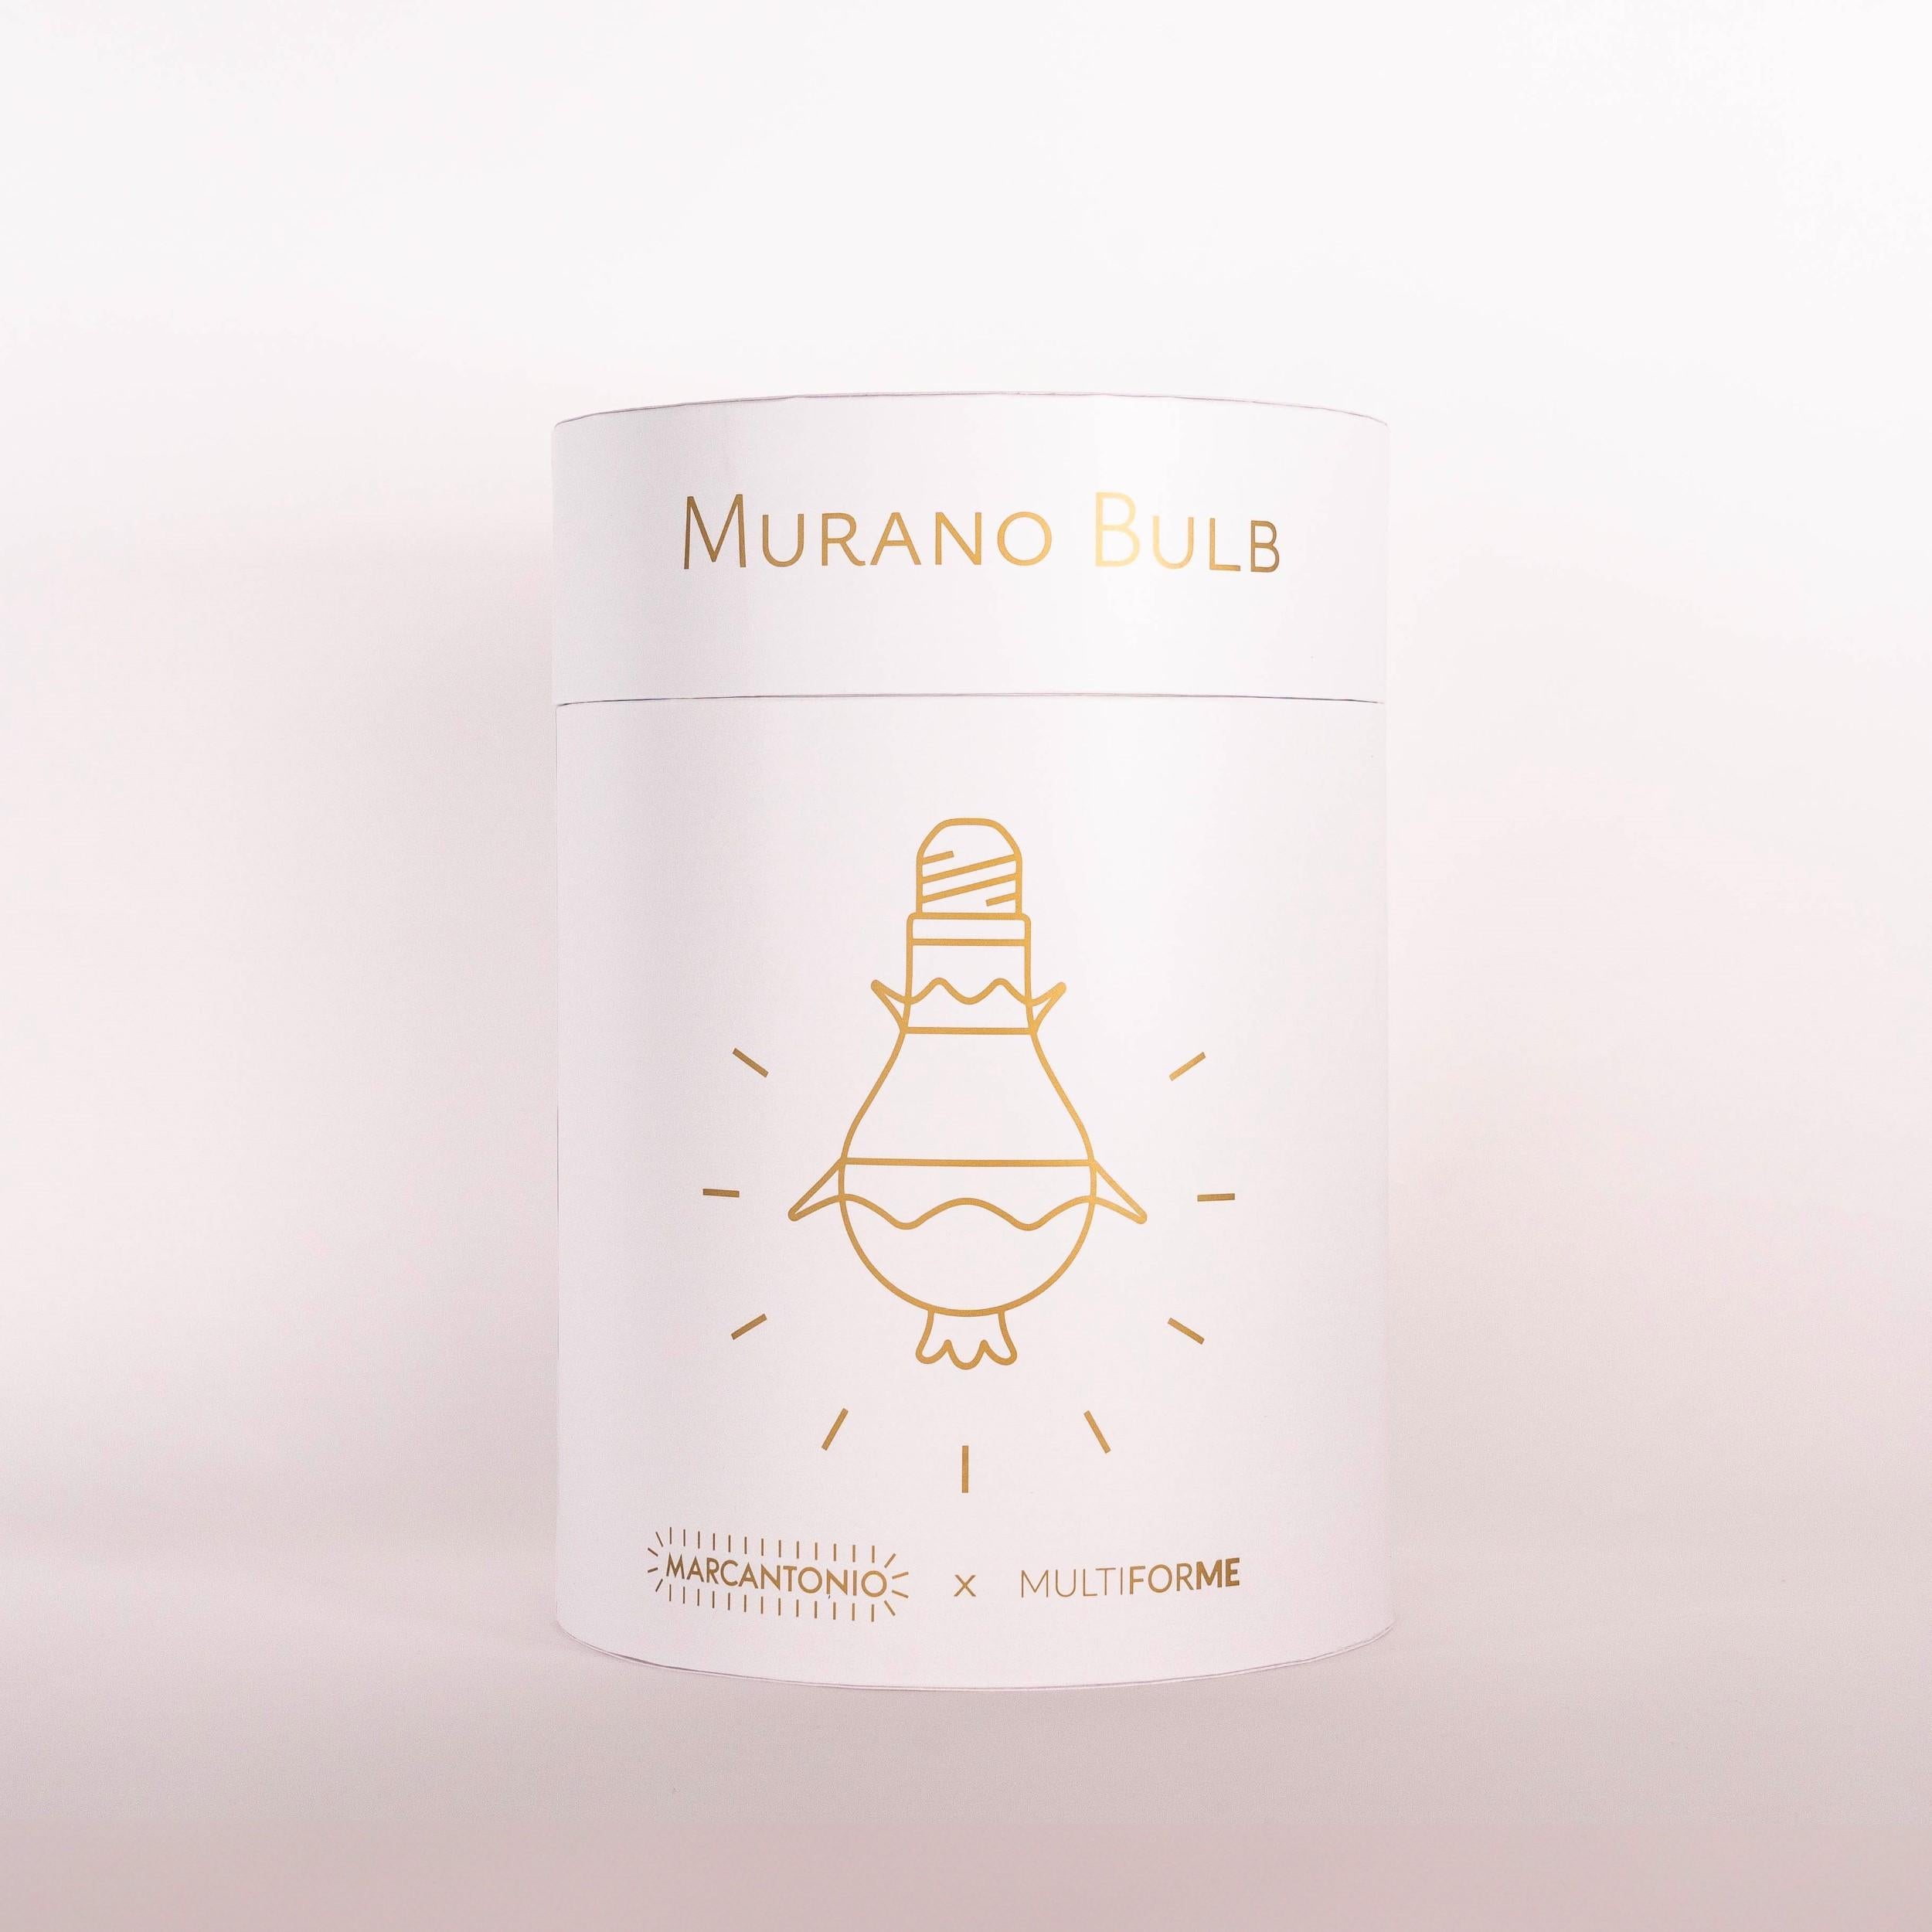 Artistic glass lightbulb chandelier Murano Bulb Marcantonio X Multiforme #05 For Sale 2